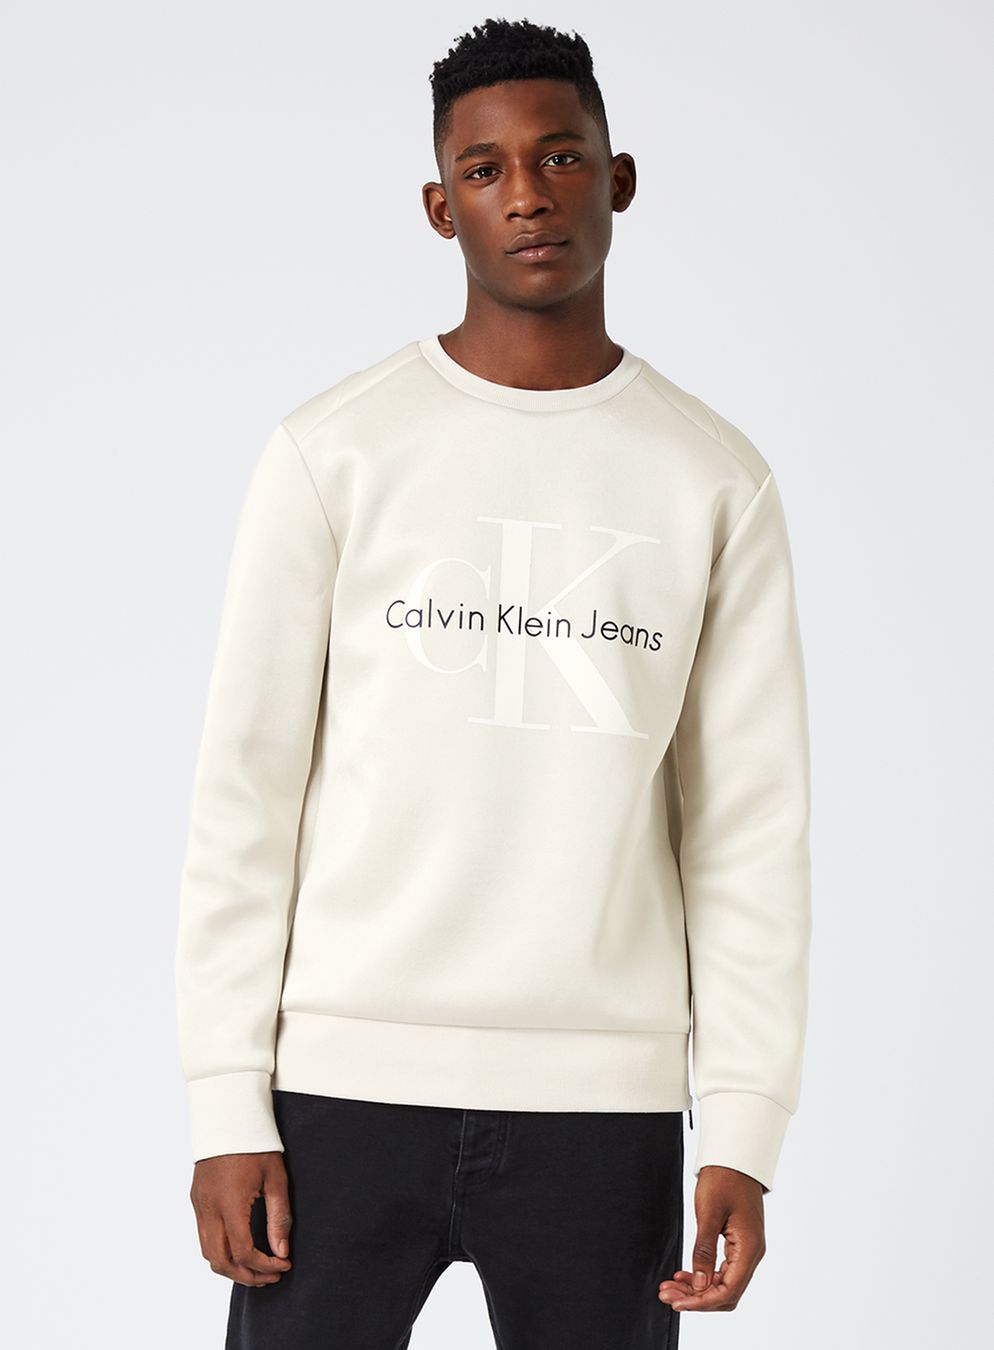 The Menswear Branded Sweatshirt Trend - Your Average Guy